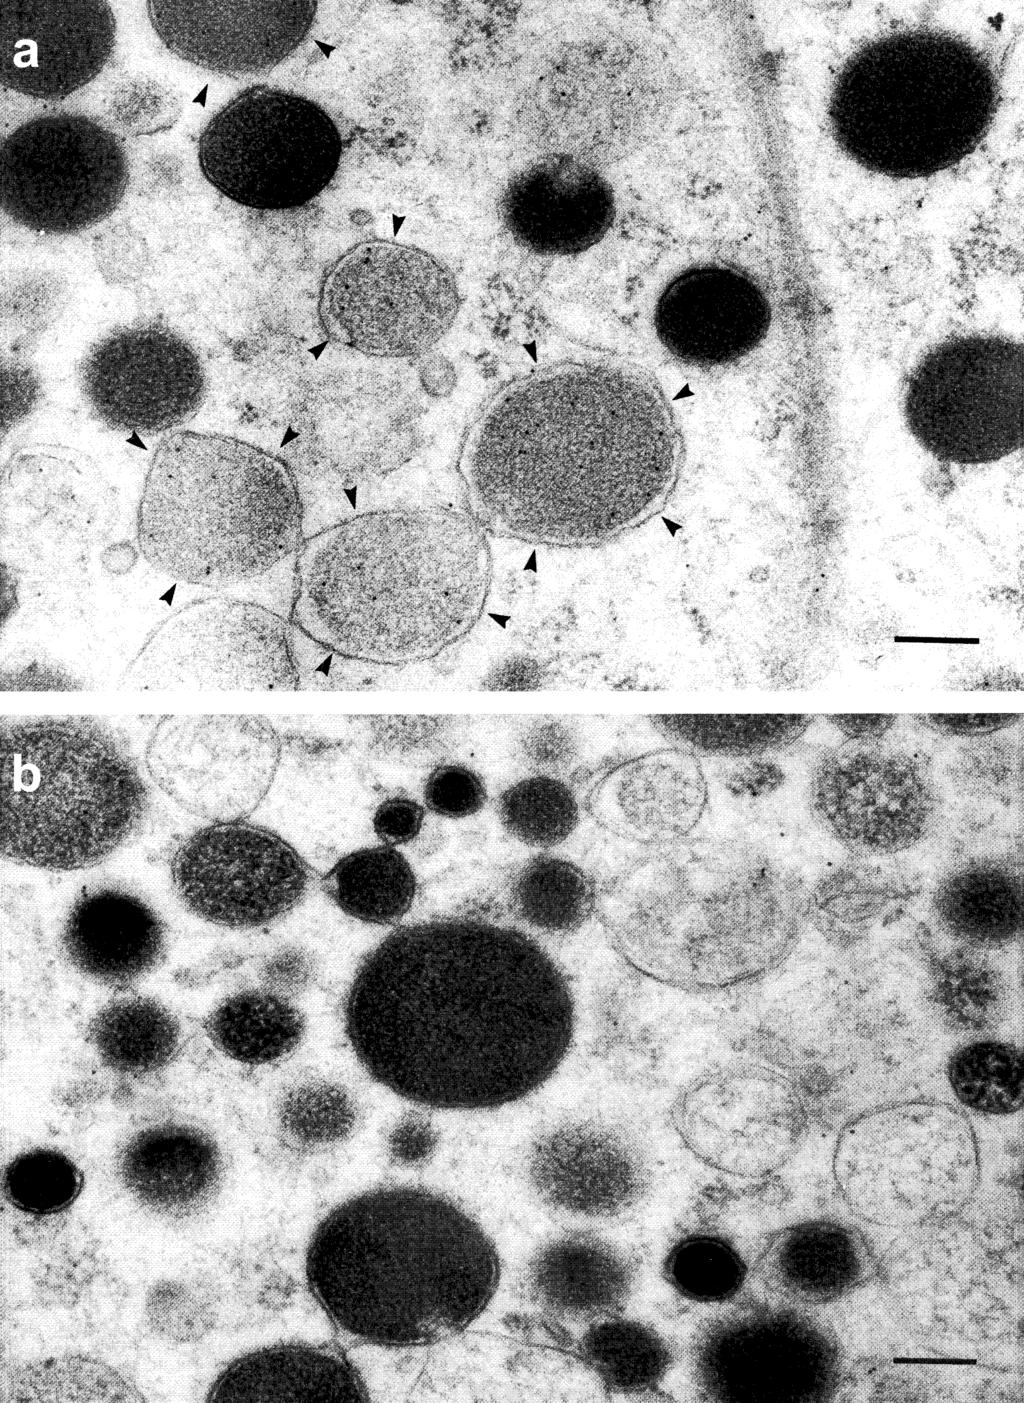 416 A.W. Henkel et al./febs Letters 505 (2001) 414^418 Fig. 3. Endocytosis of LDCV membrane by large vesicles.